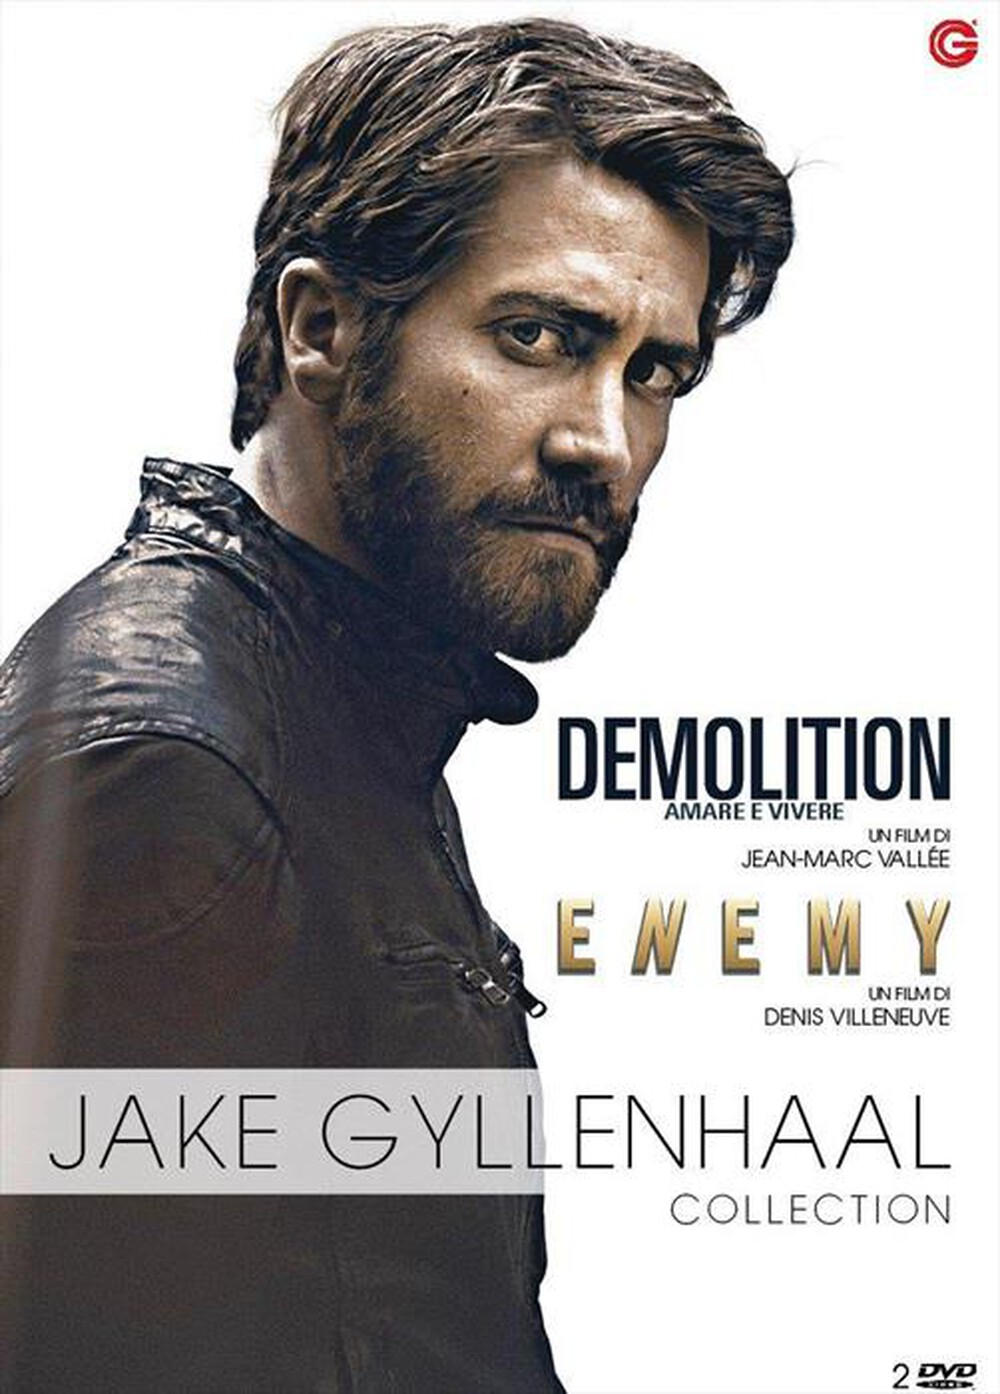 "CECCHI GORI - Jake Gyllenhaal Collection (2 Dvd)"